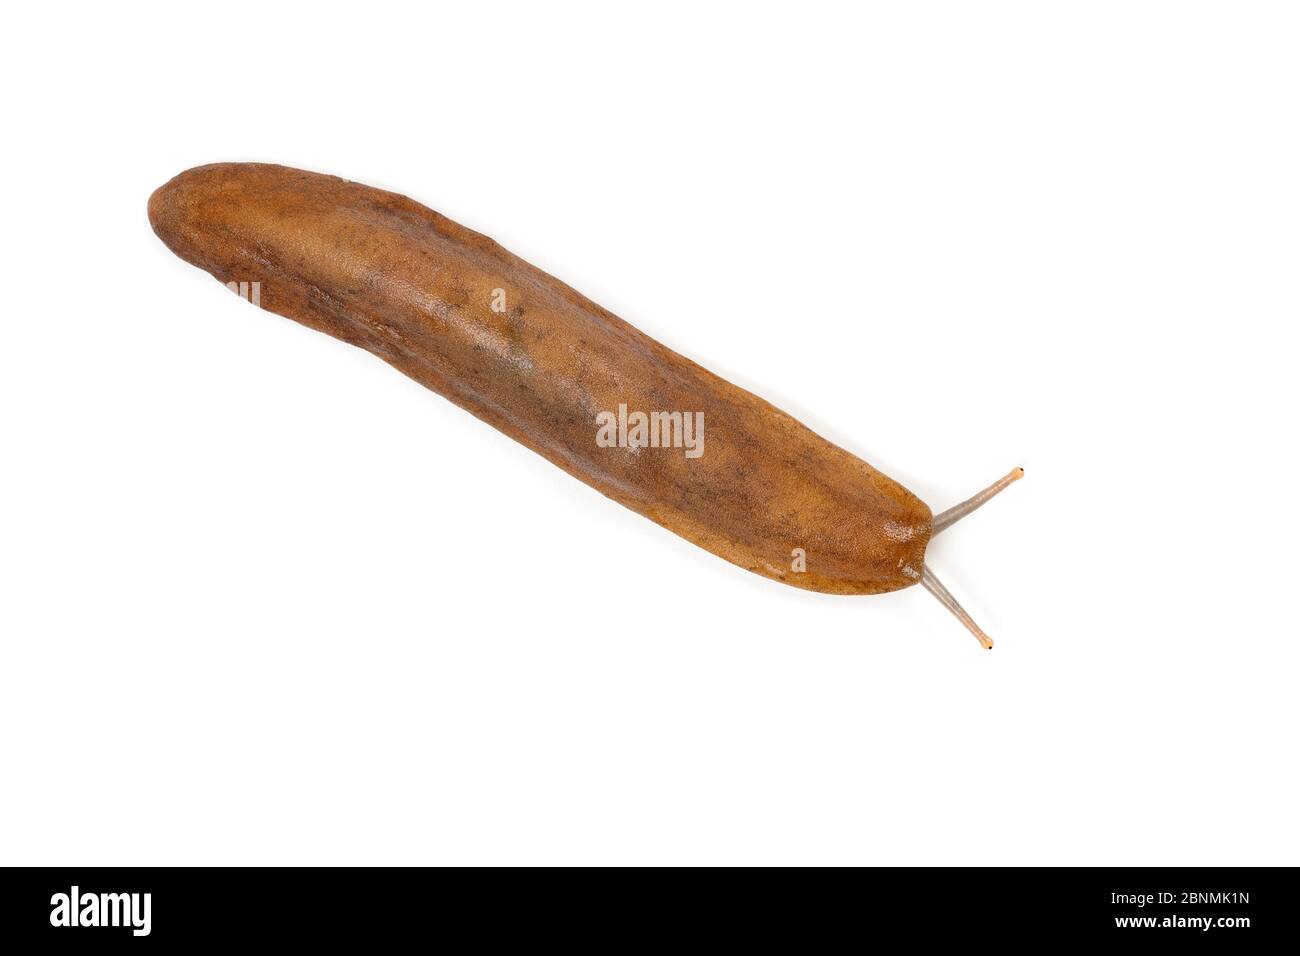 Pancake slug (Veronicella sloanei) captive from Central America Stock Photo